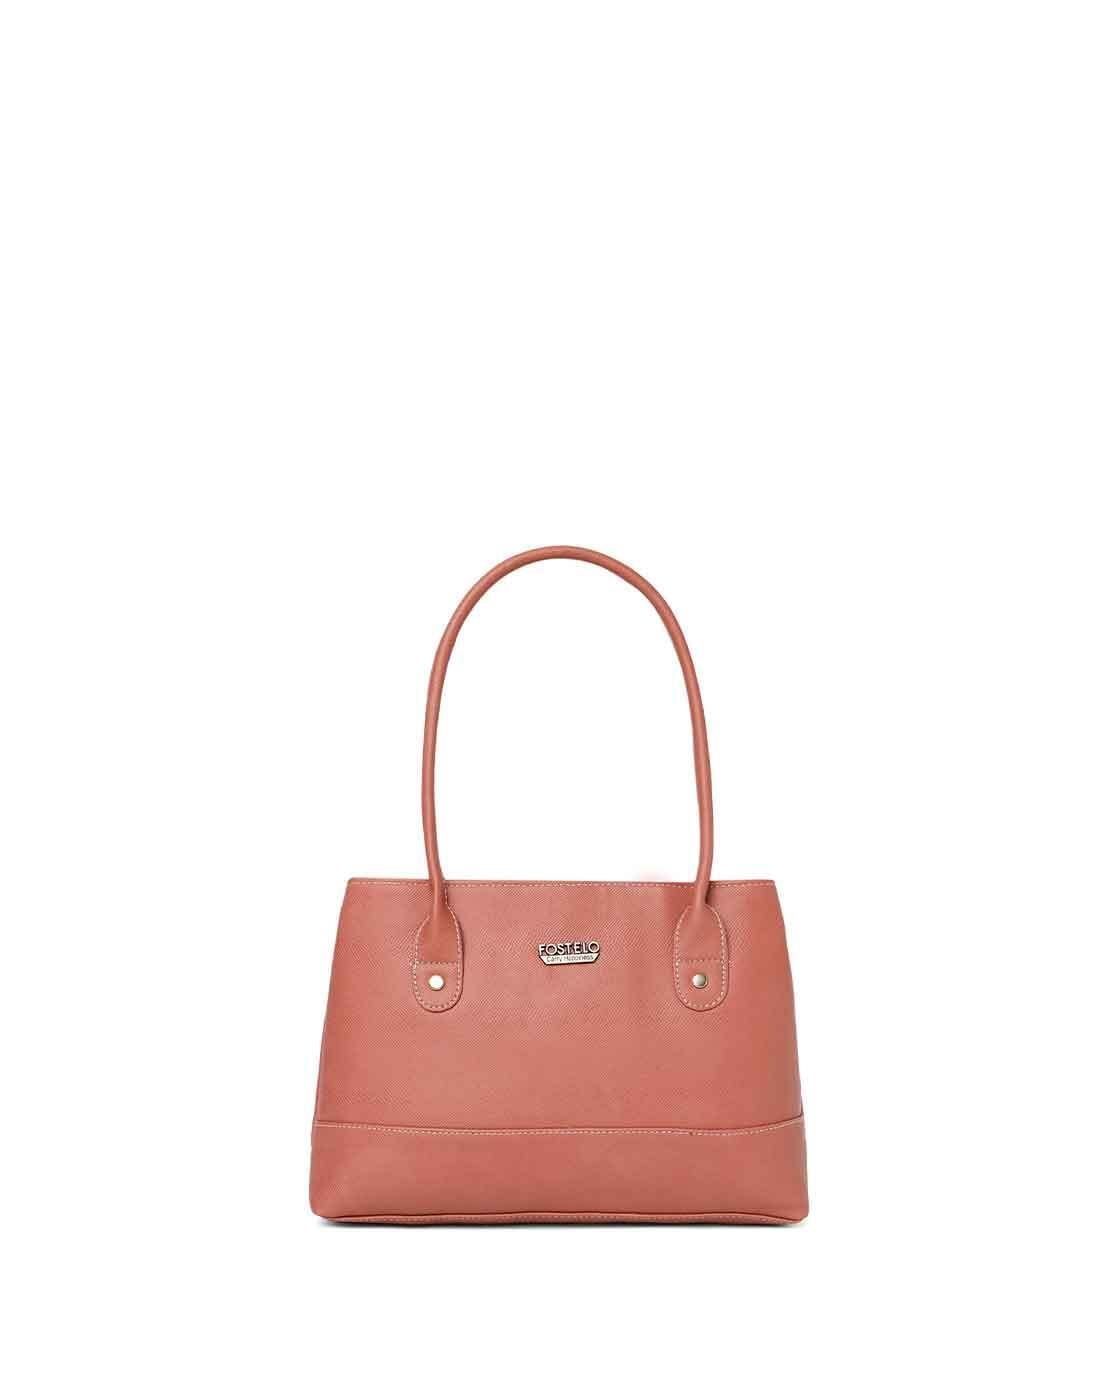 Buy Online Ladies Bag | Top Branded Handbags Purse for Women